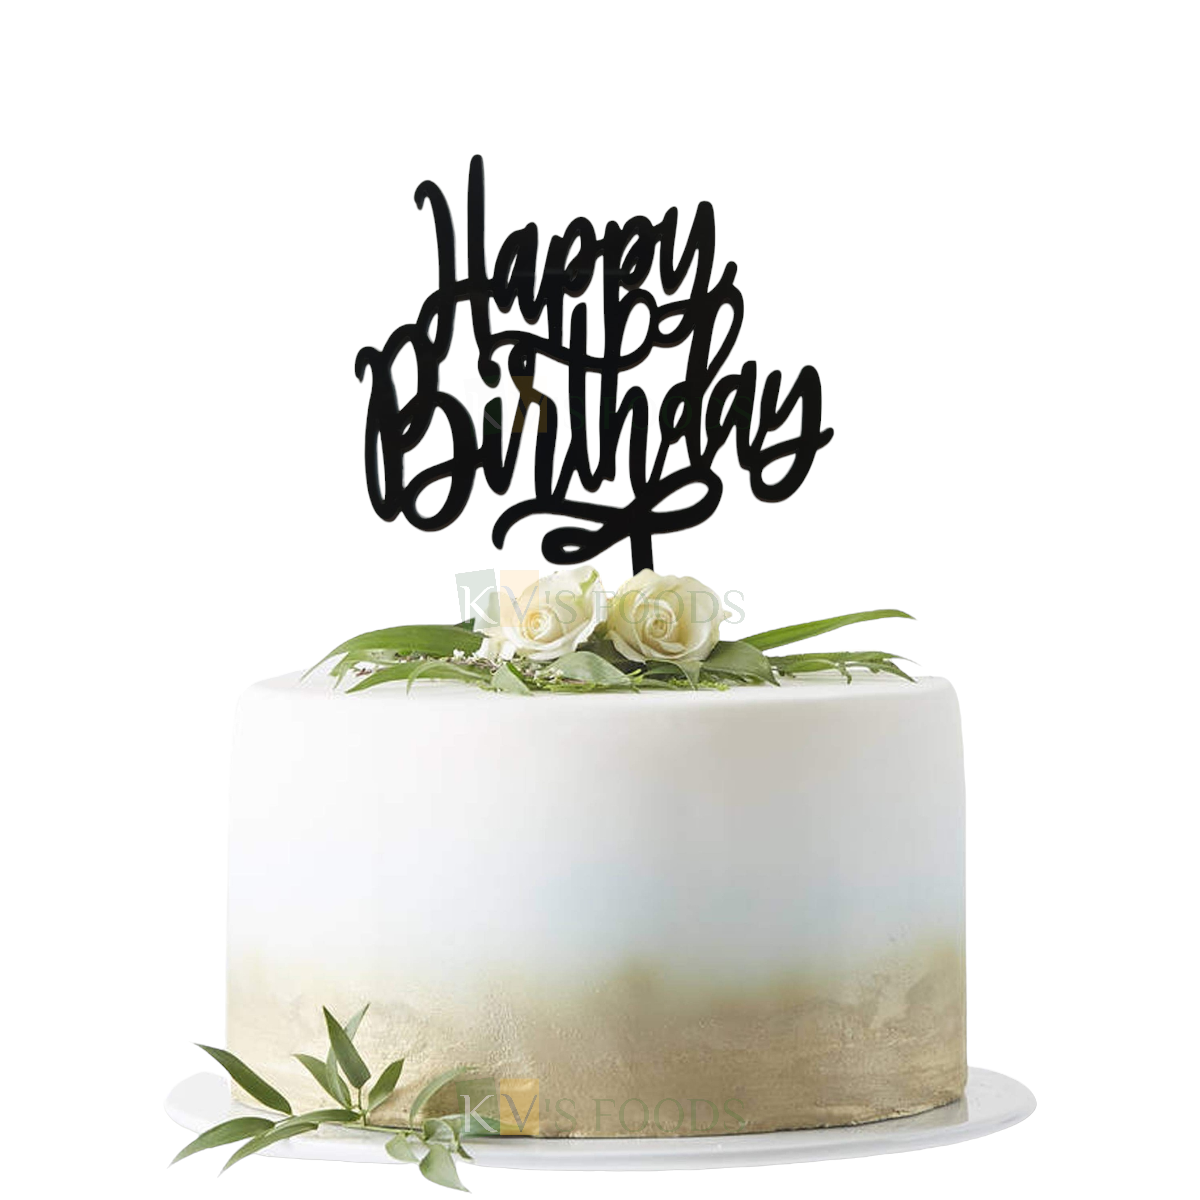 1PC Black Acrylic Happy Birthday Letters with Unique Elegant Font Design Cake Topper, Cupcake Insert, DIY Girl/Boy Cake Decoration